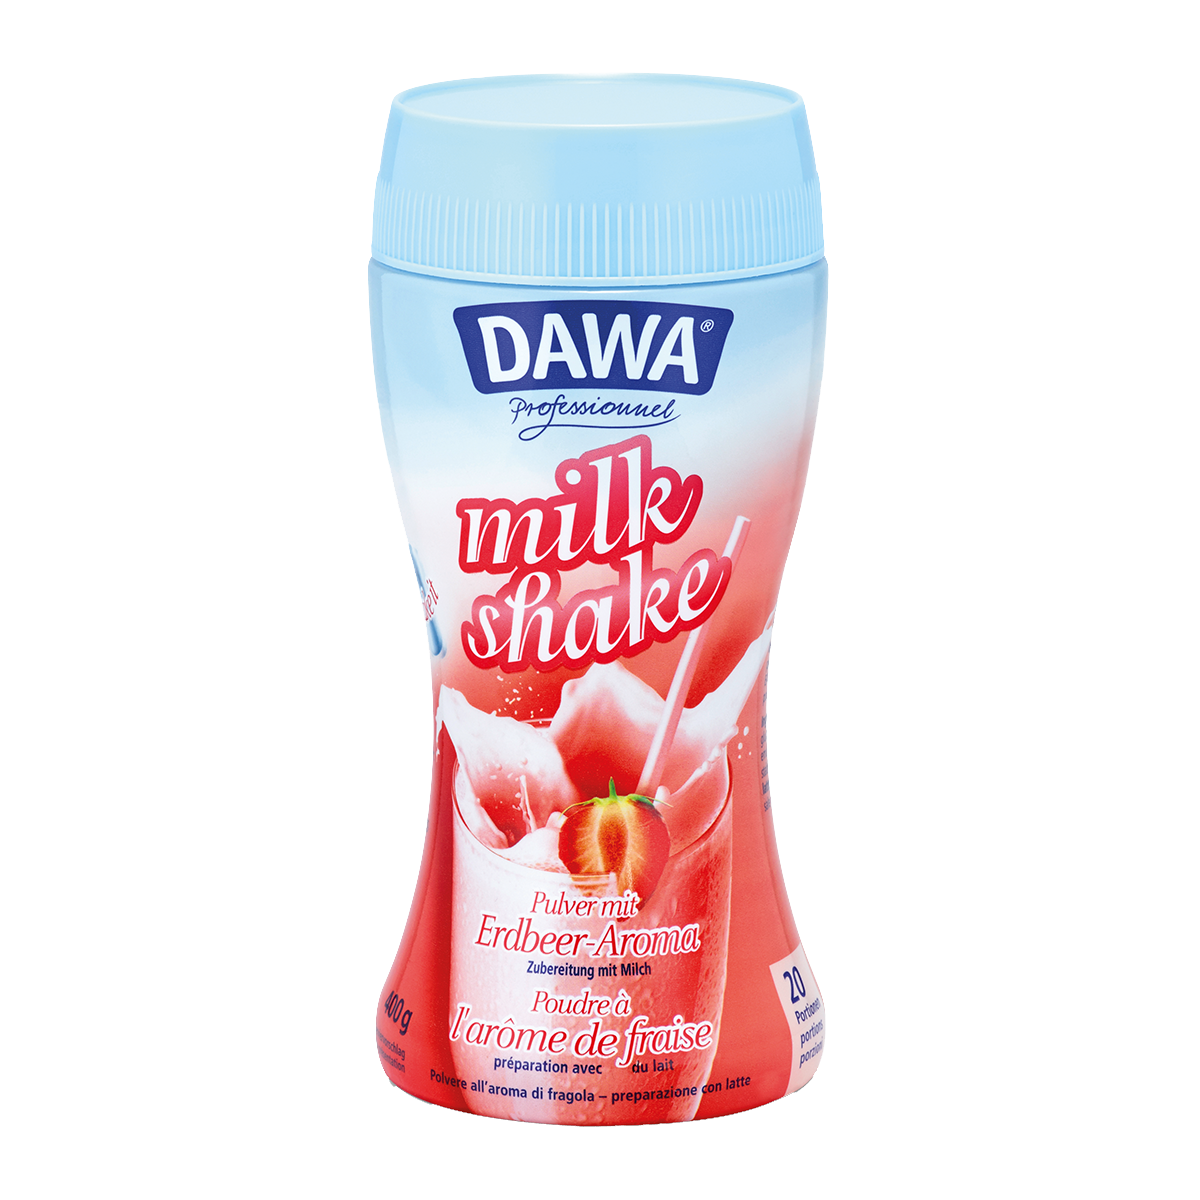  Milk shake à la fraise Dawa - la boisson estivale